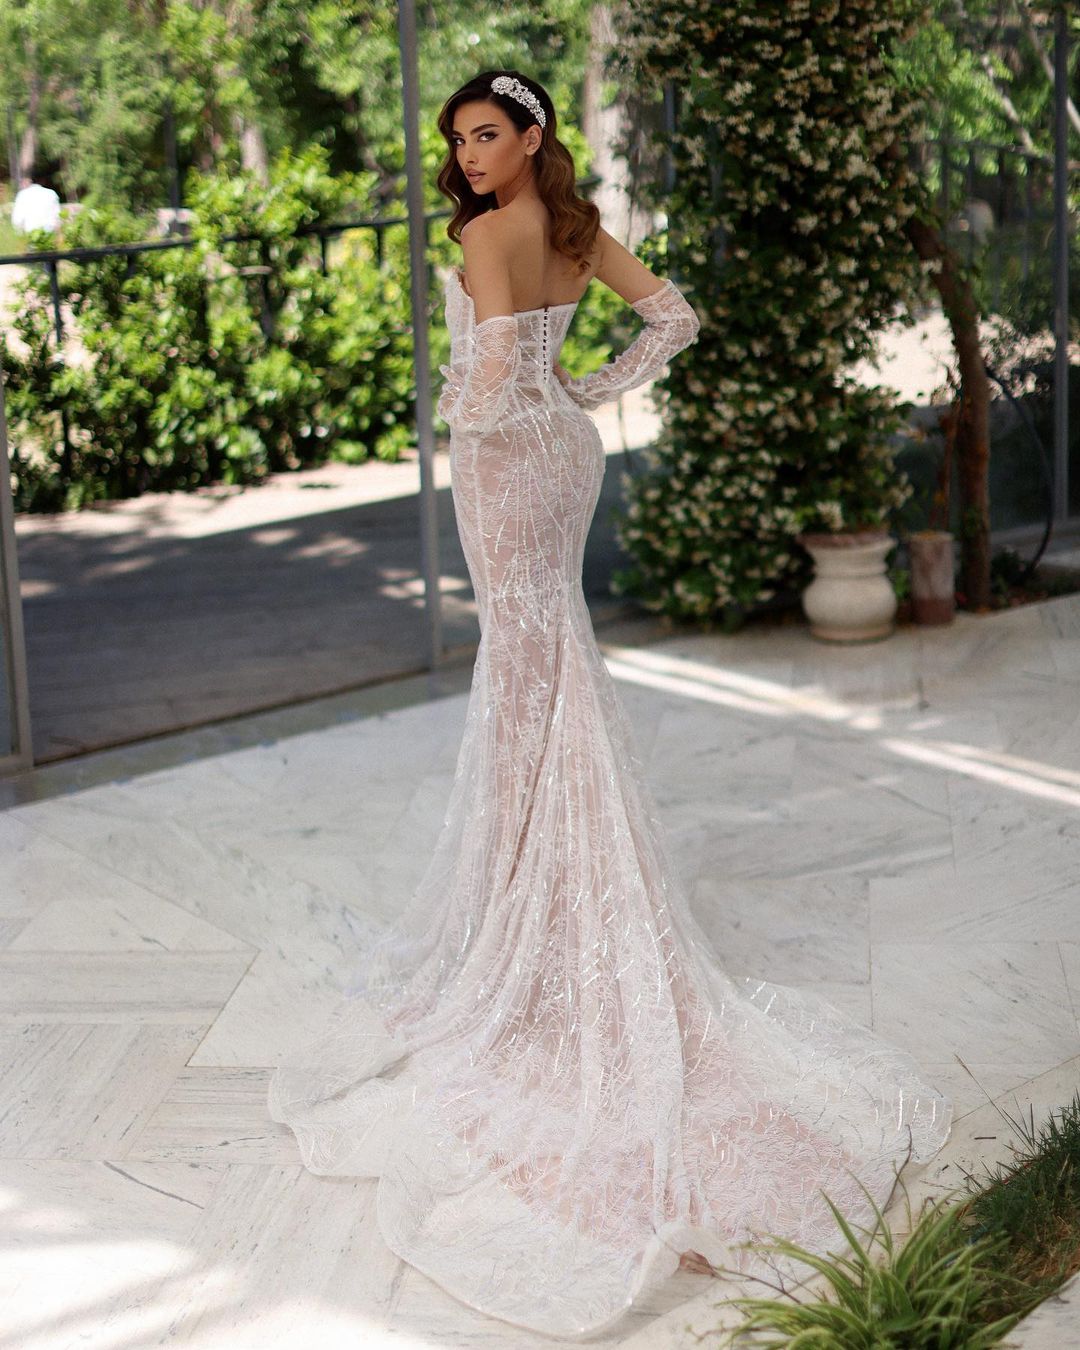 Daçiana Beautiful Wedding Dress